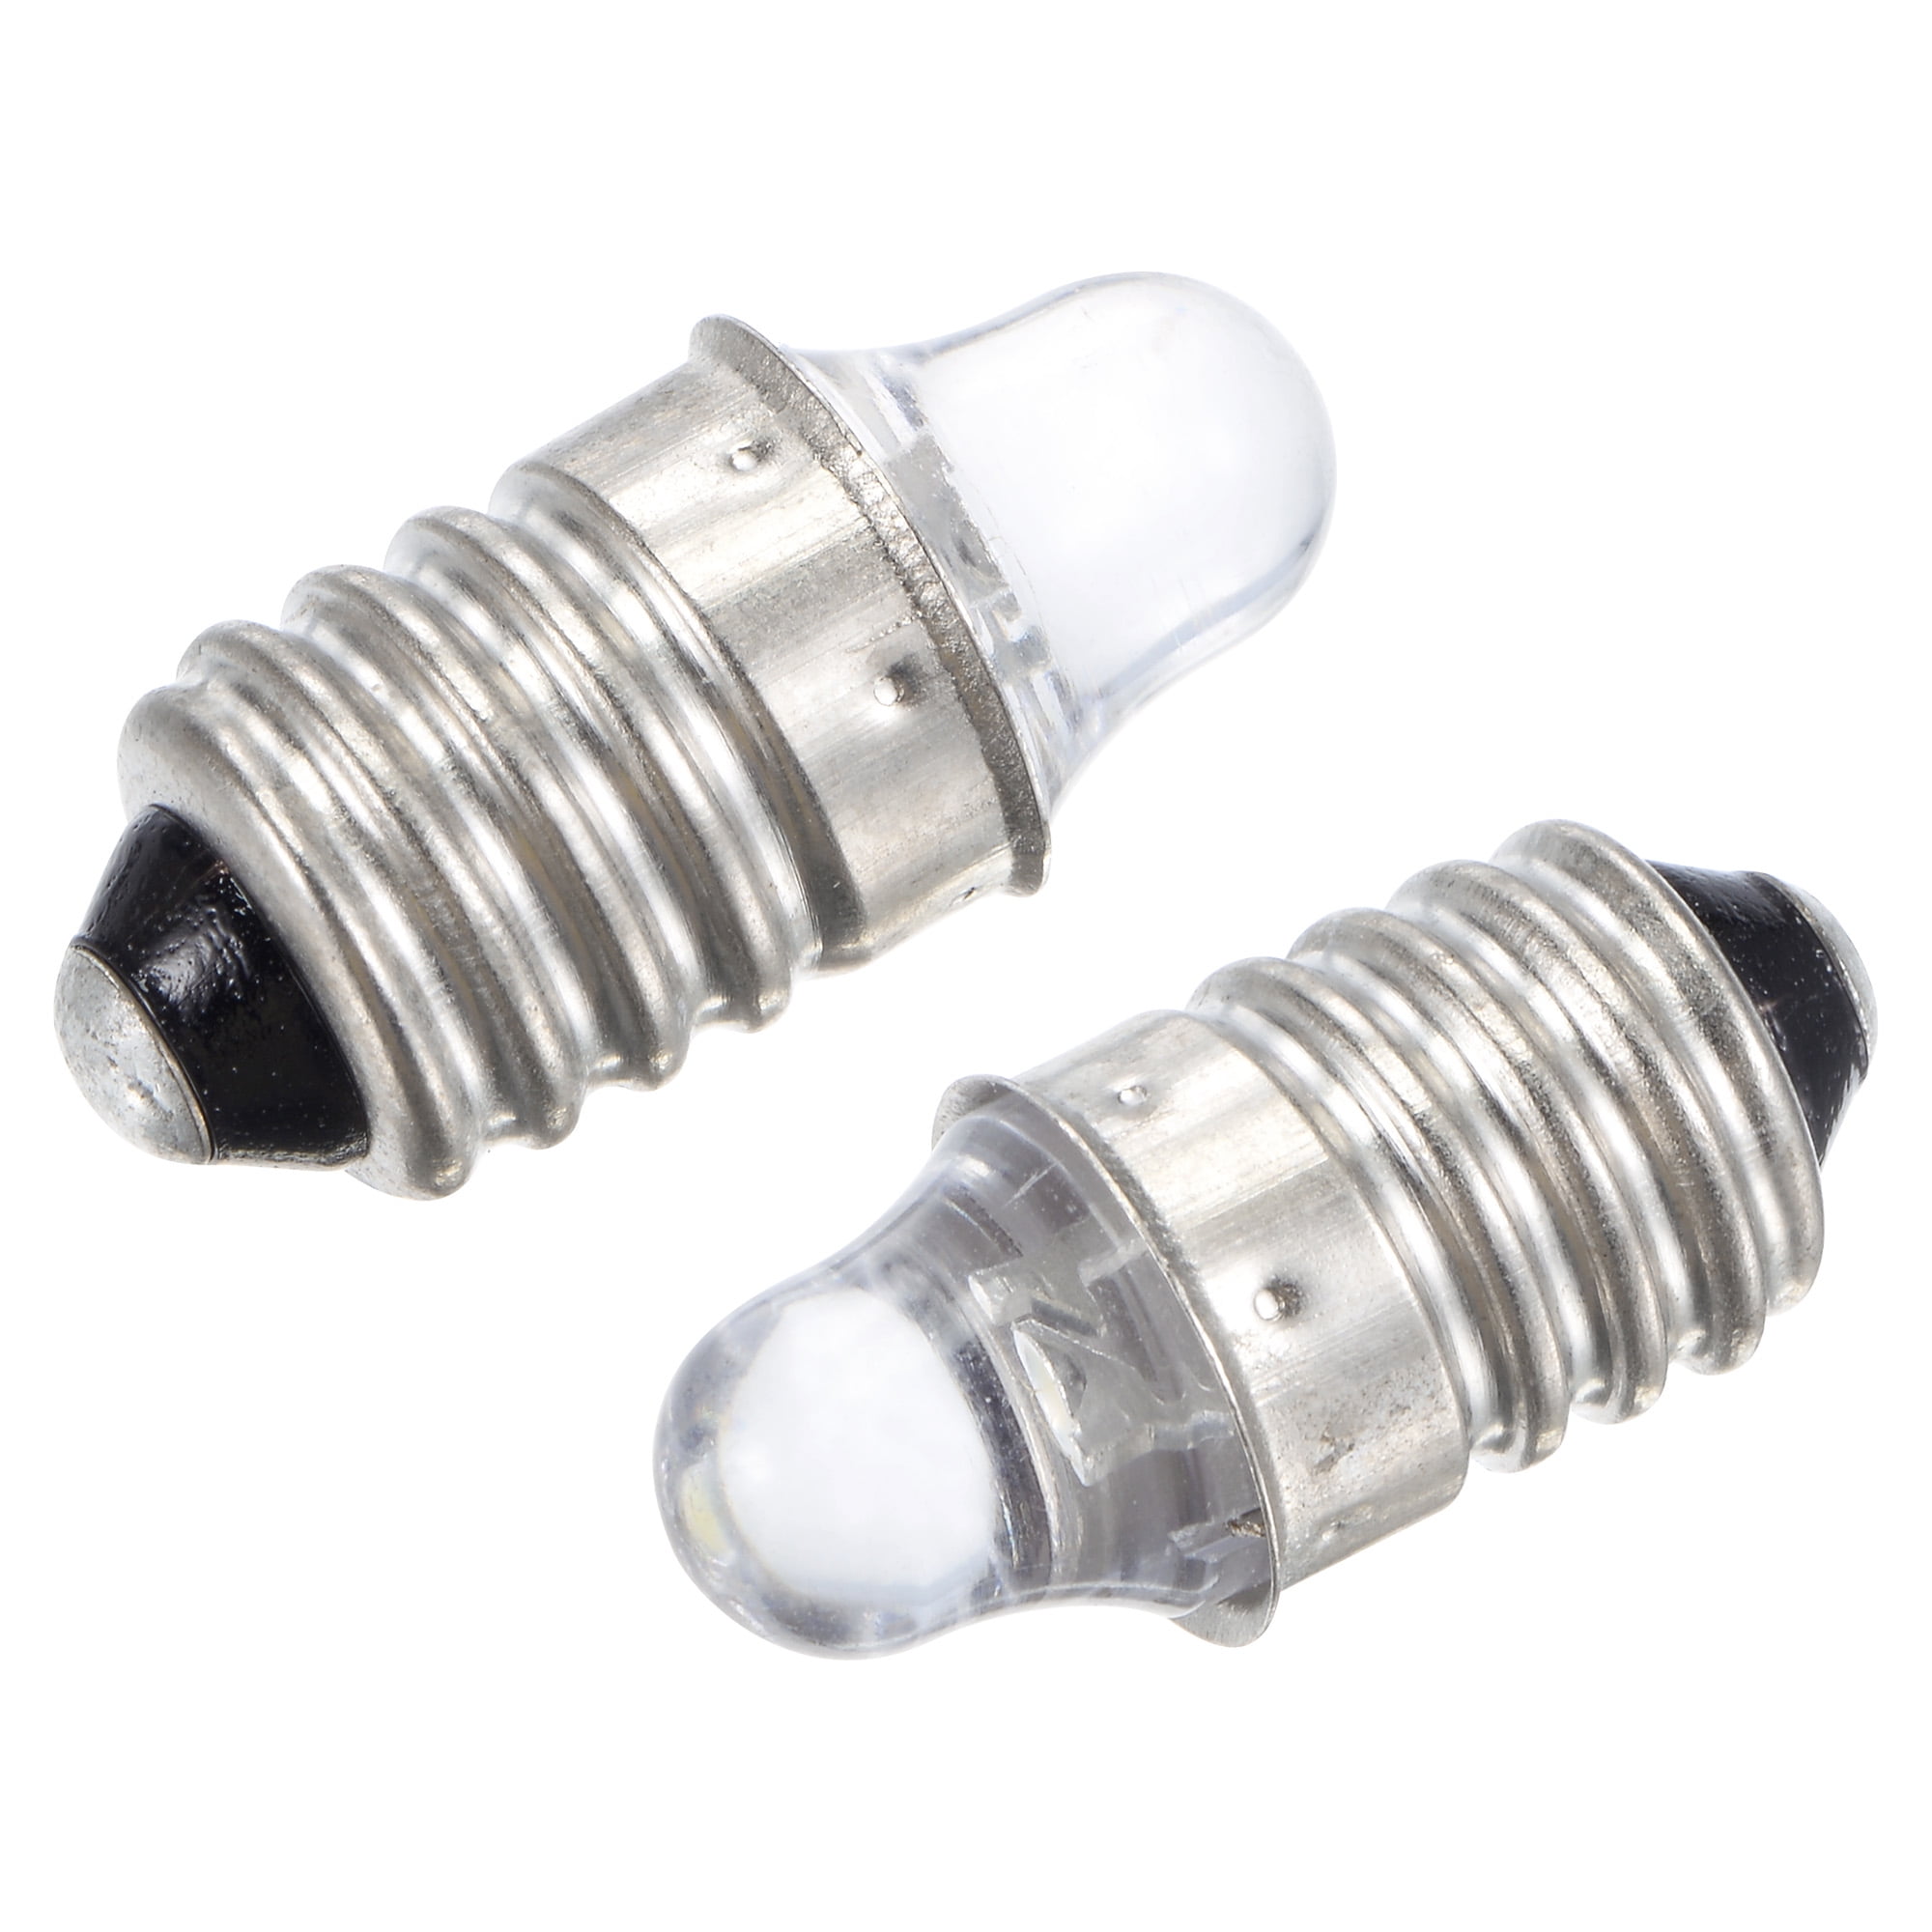 Warm White E10 Small LED Bulbs Warm White 3 Volt Mini Lamps Pack of 5 Miniature LED Flashlight Bulbs